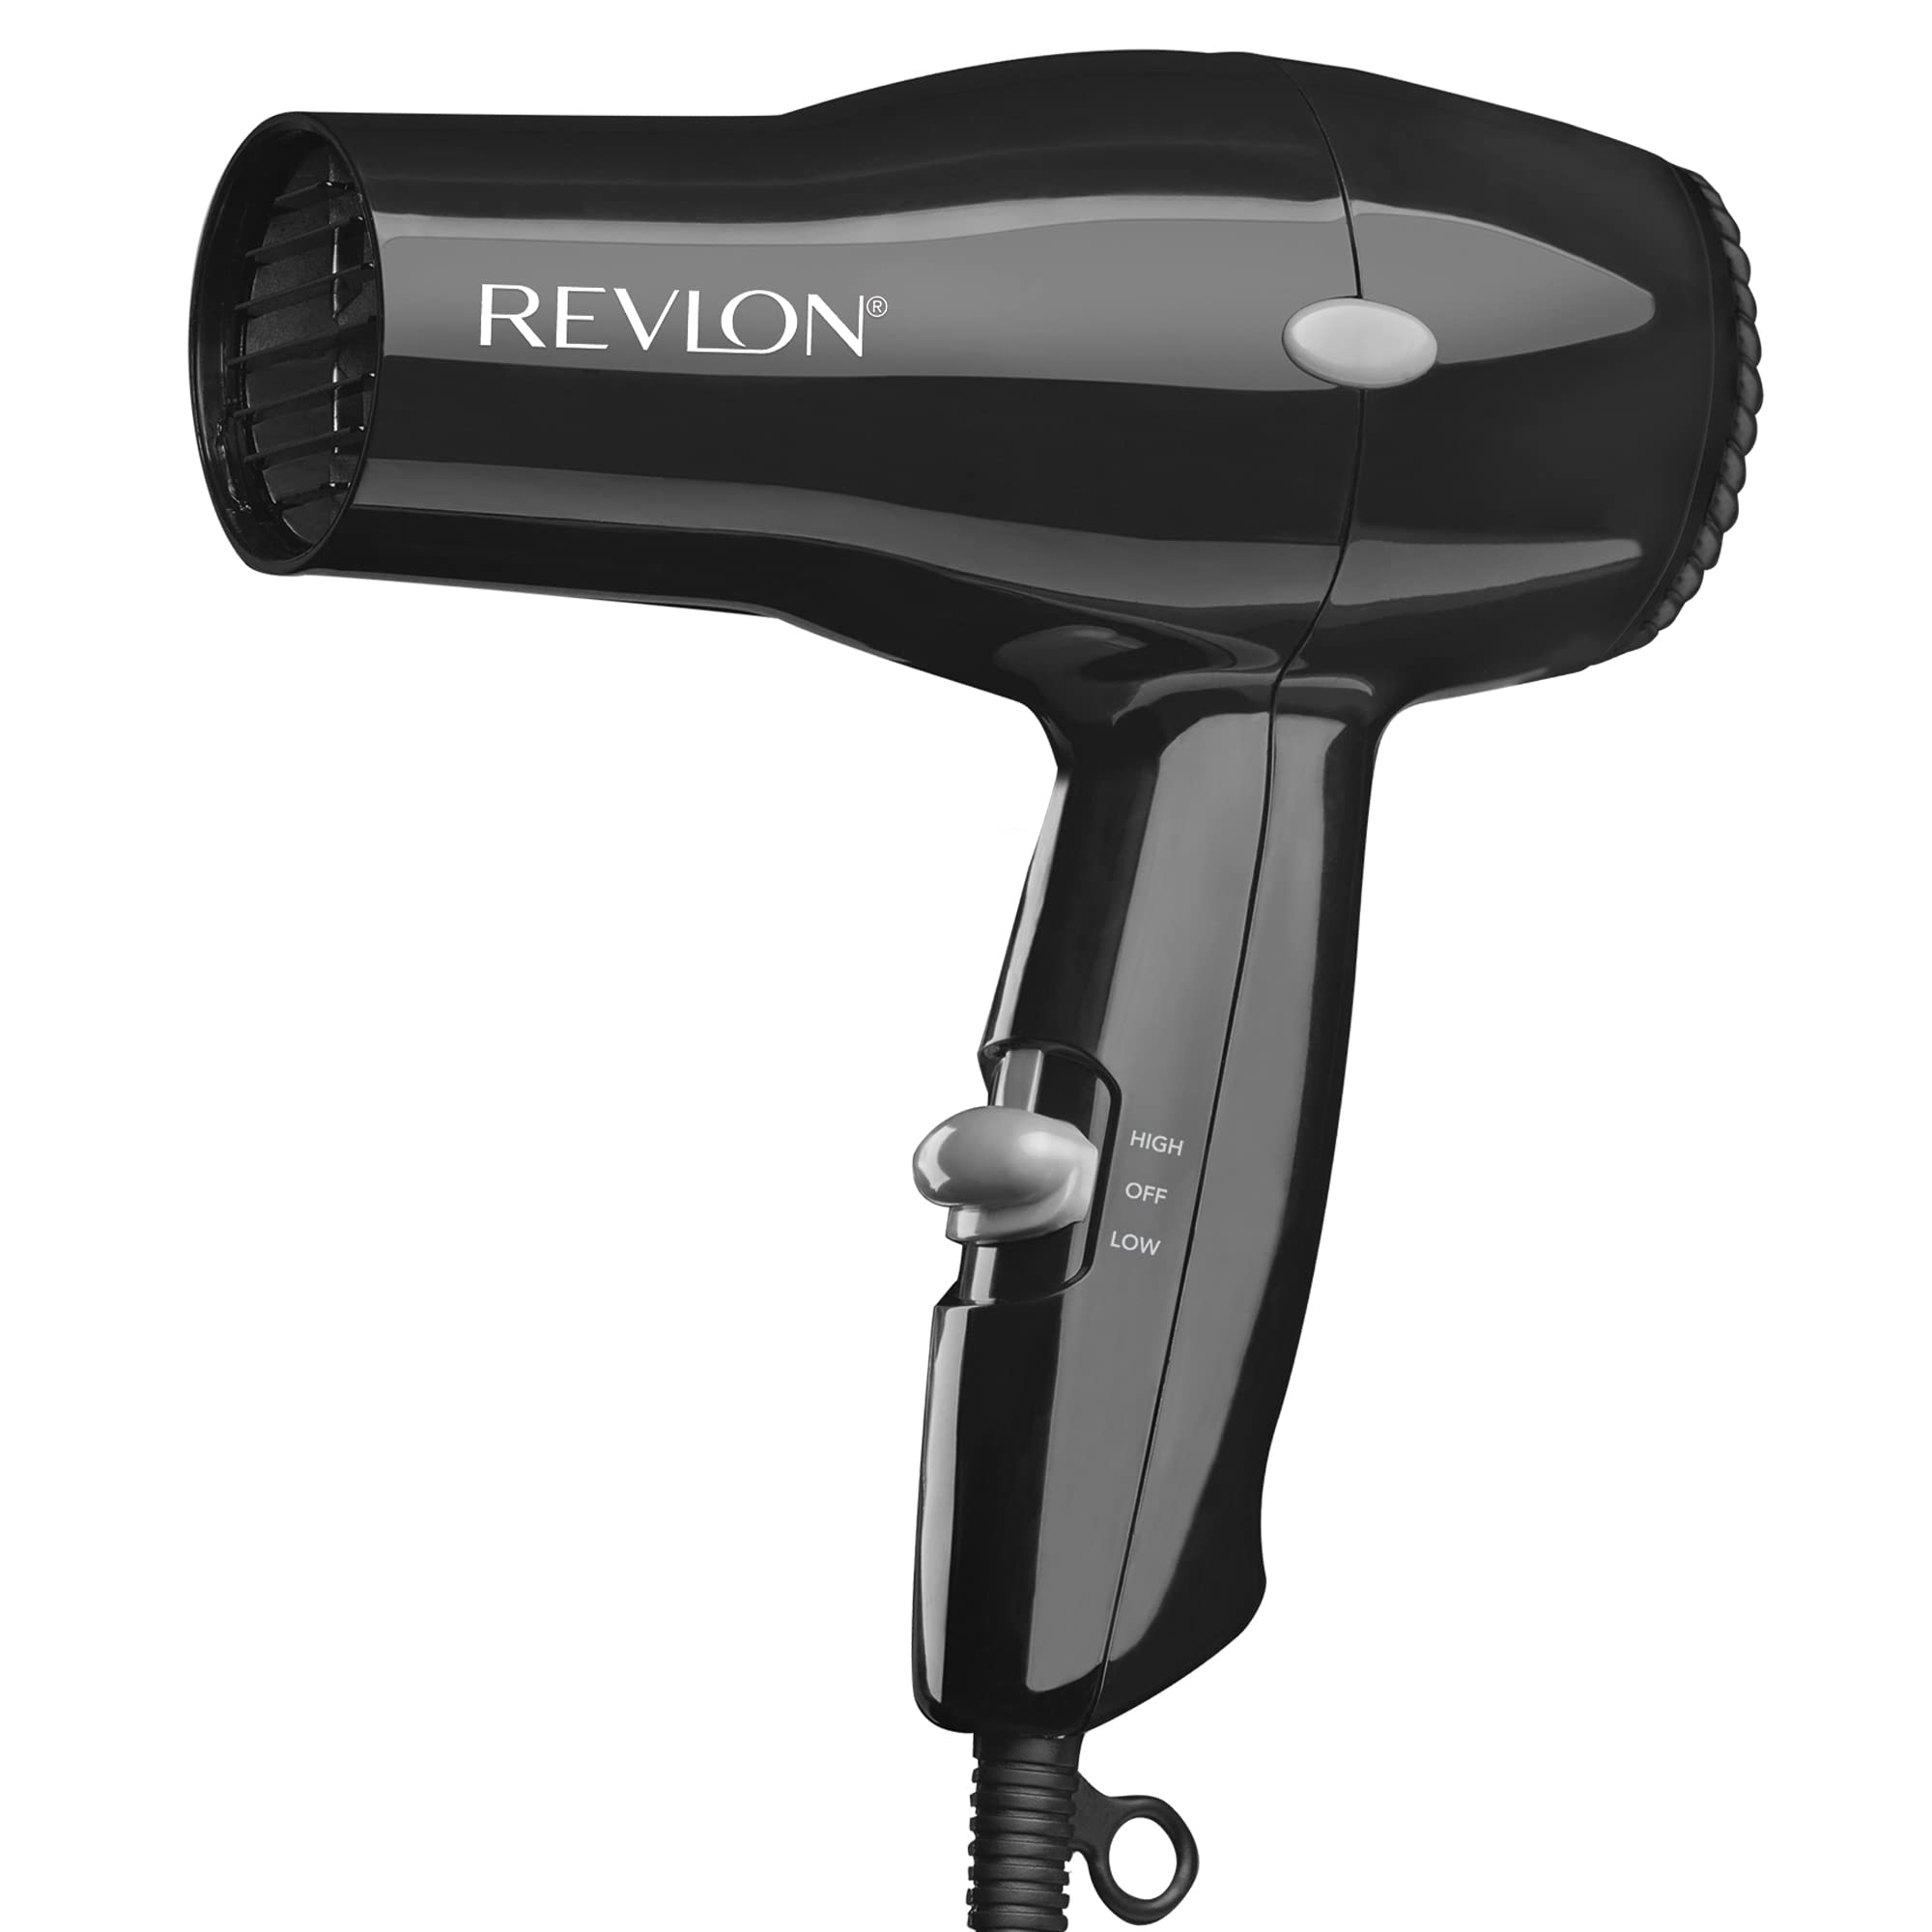 Revlon Compact Hair Dryer | 1875W Lightweight Design, Perfect for Travel, (Black) $9.94